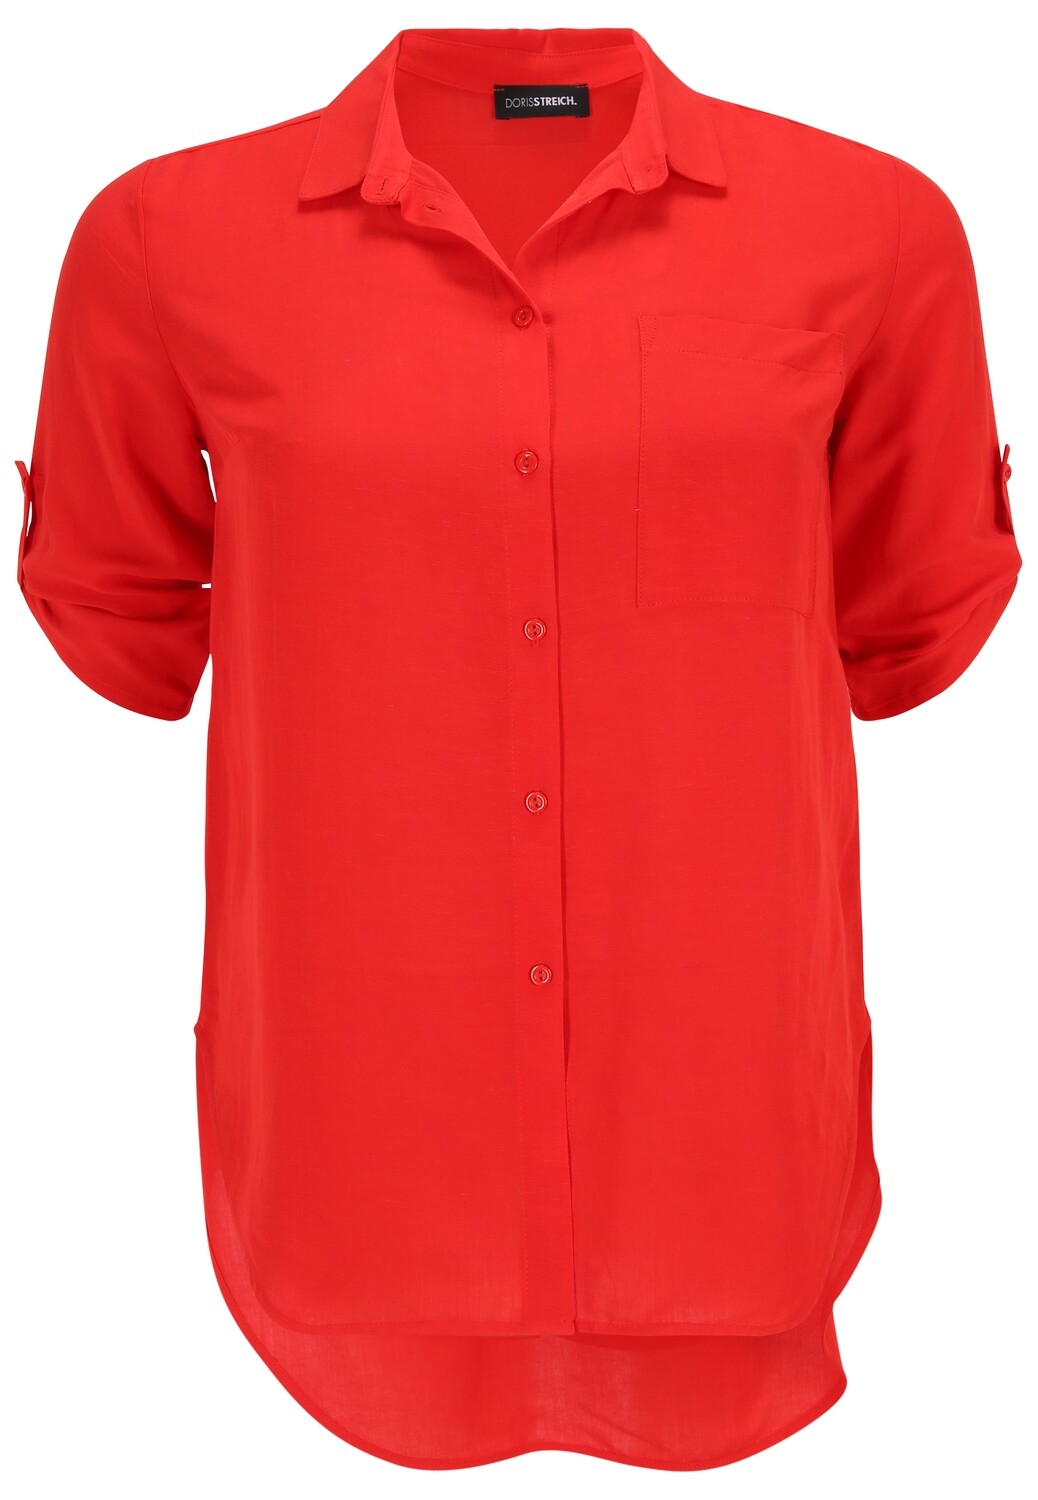 Doris Streich blouse rood 285118